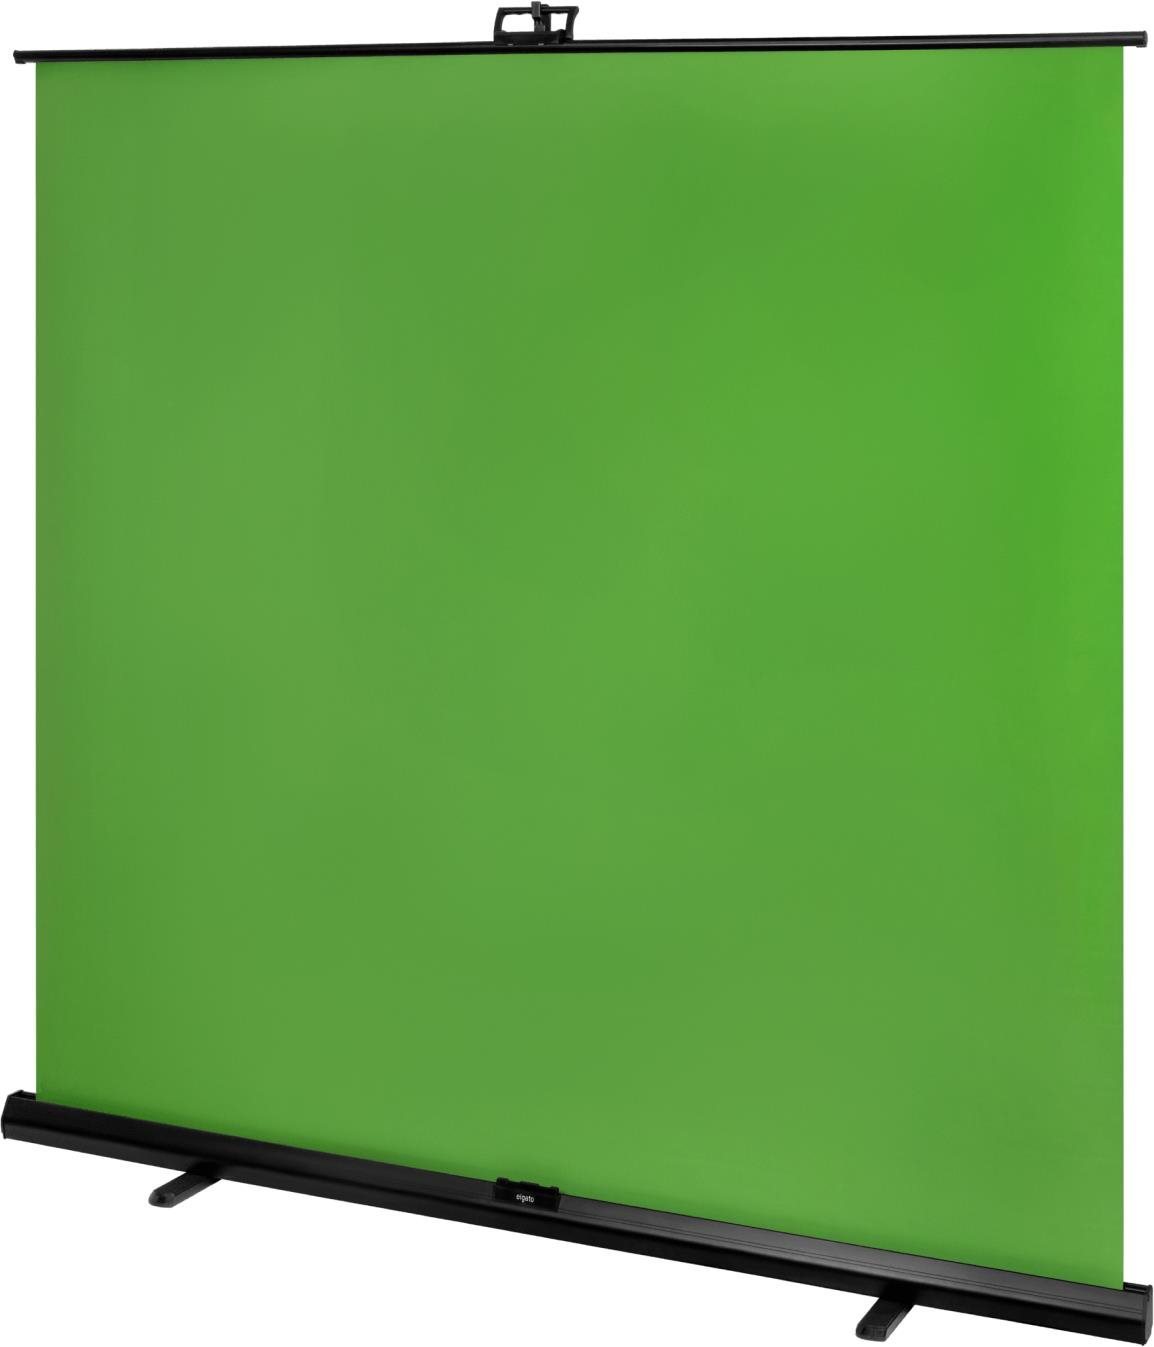 Green screen